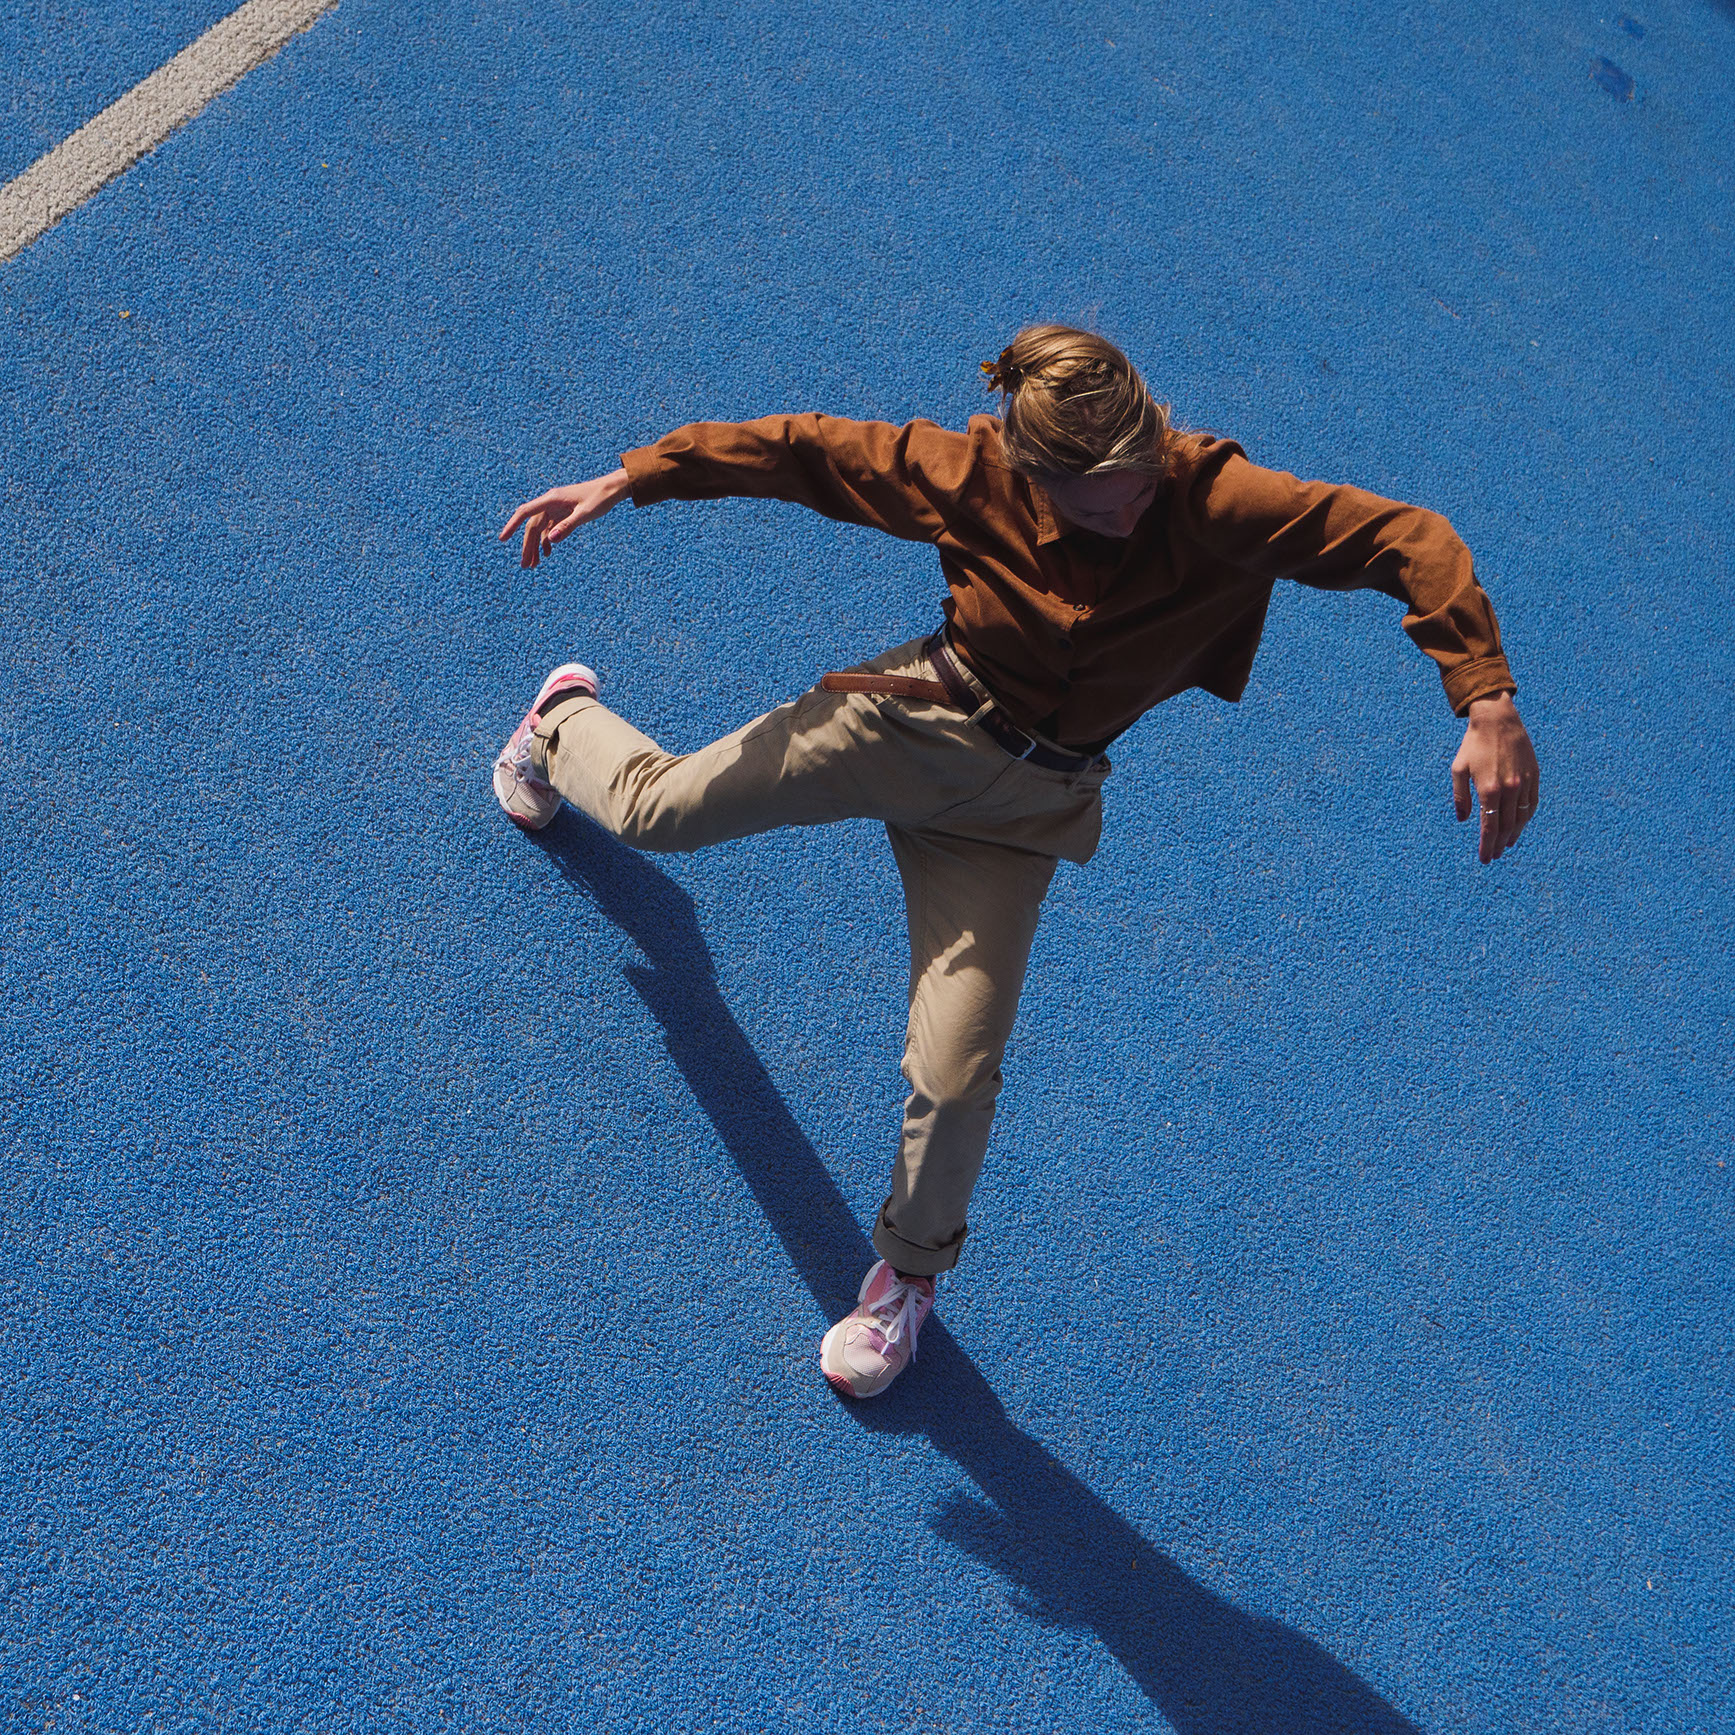 Camilla Schnack Tellefsen dancing on blue ground with brown jacket seen from above